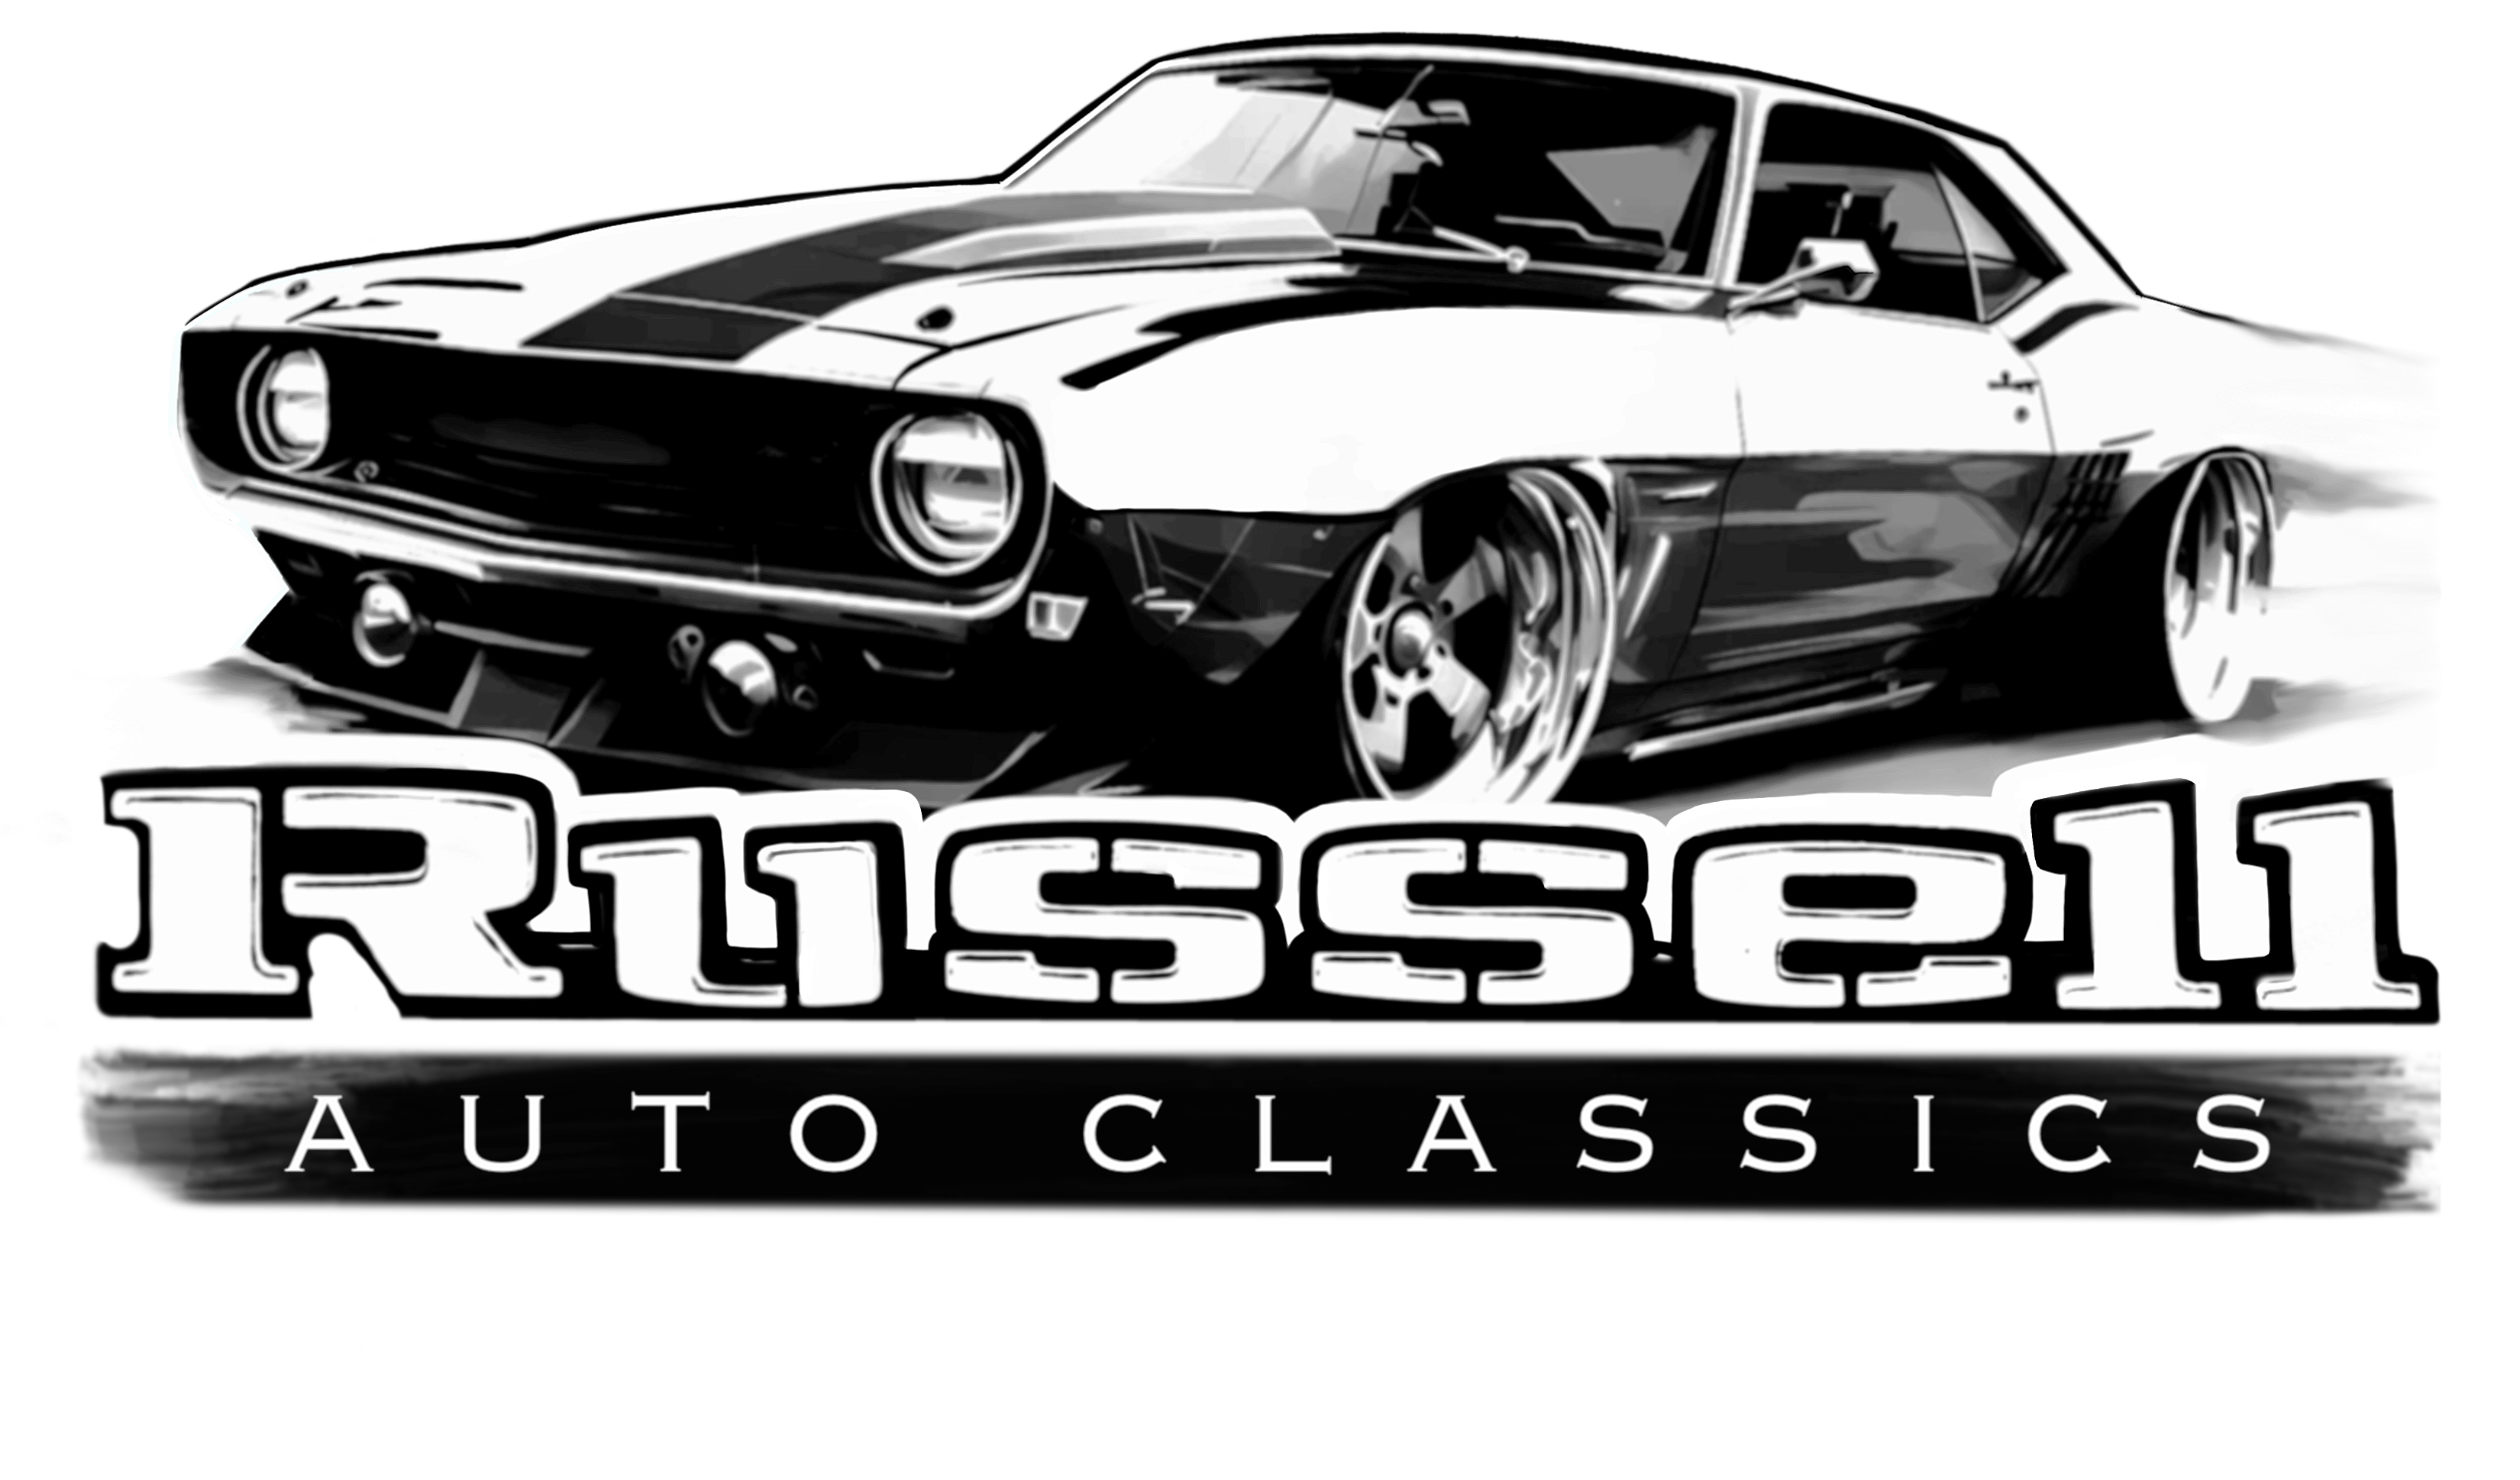 Russell Auto Classics New Logo website